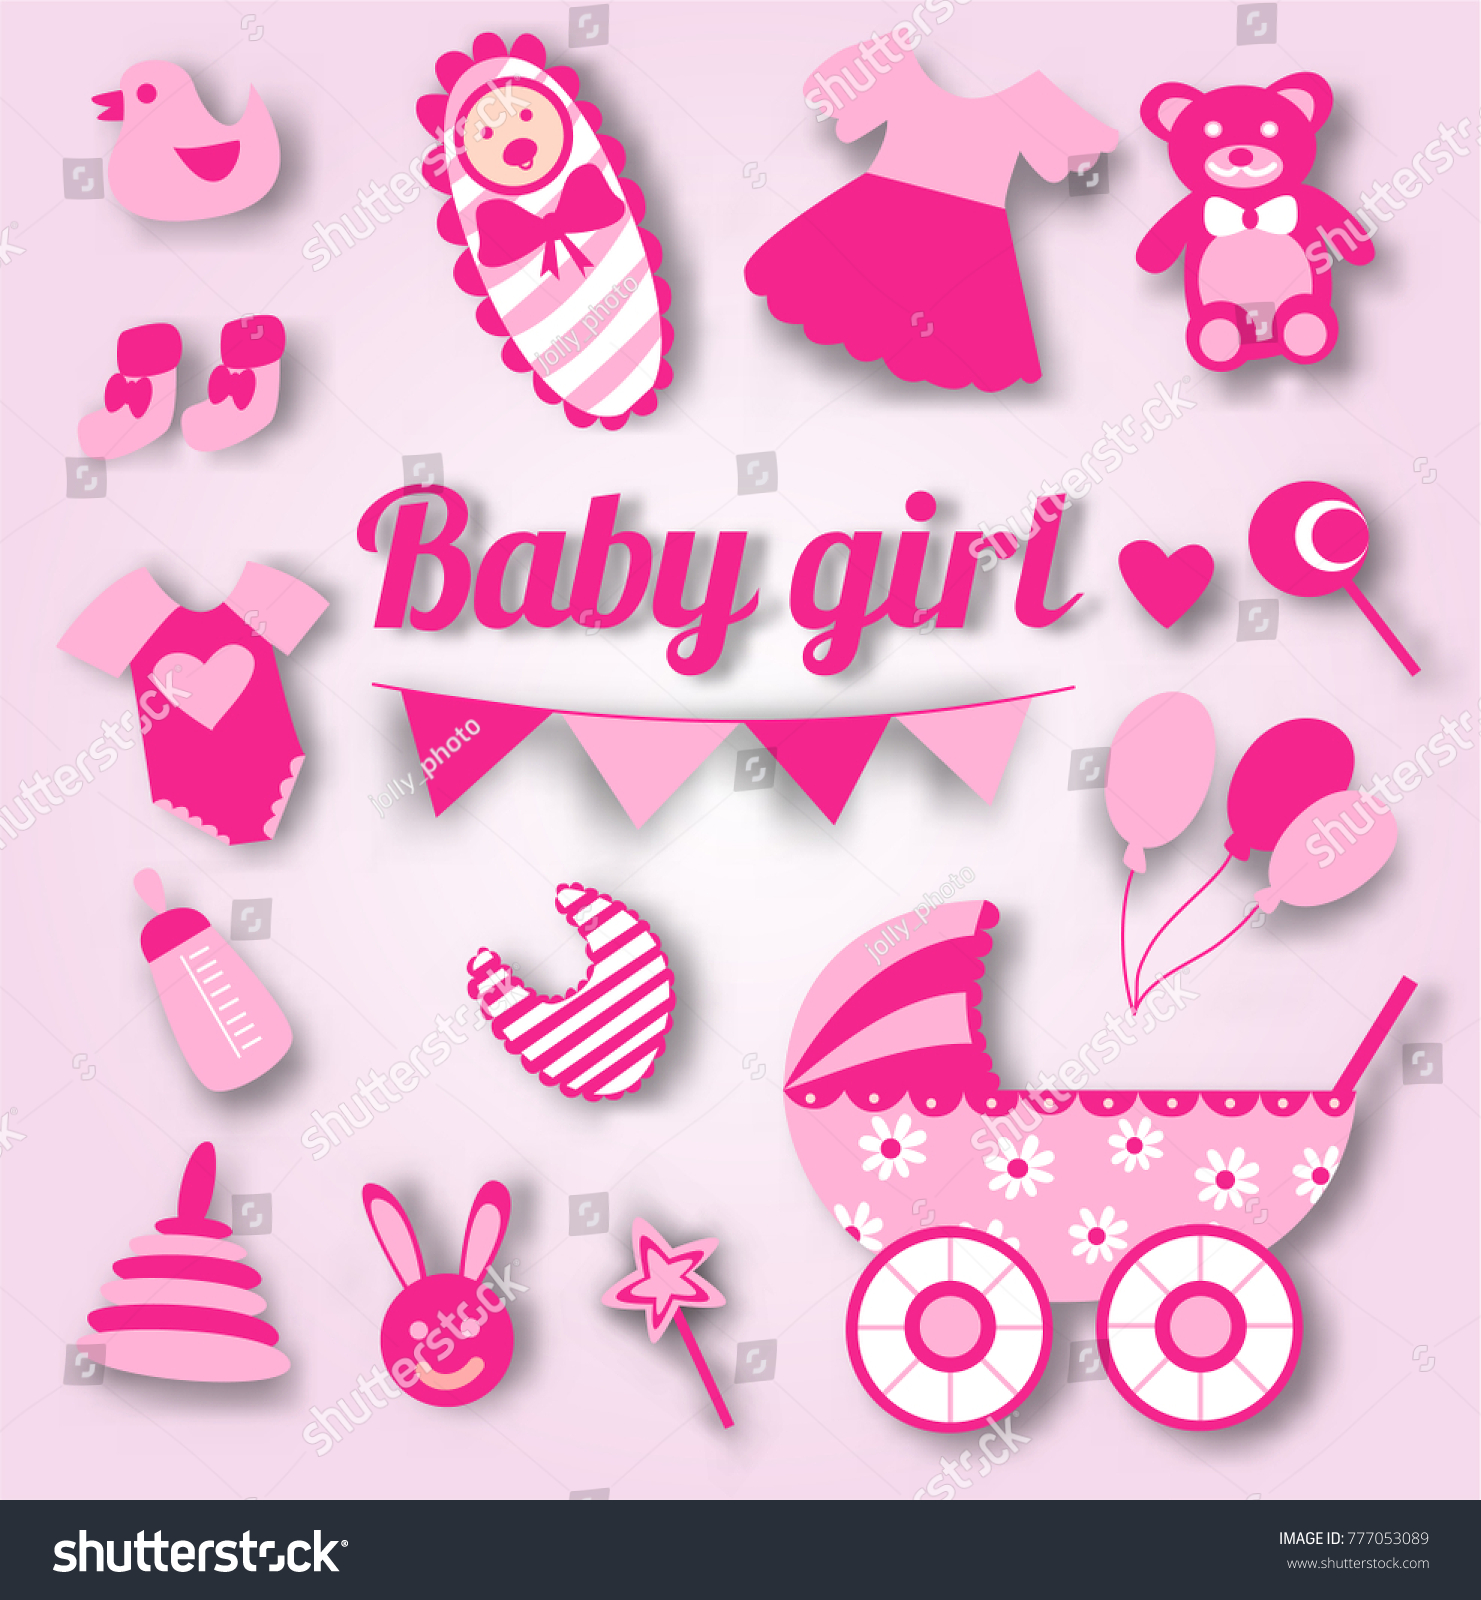 baby girl items